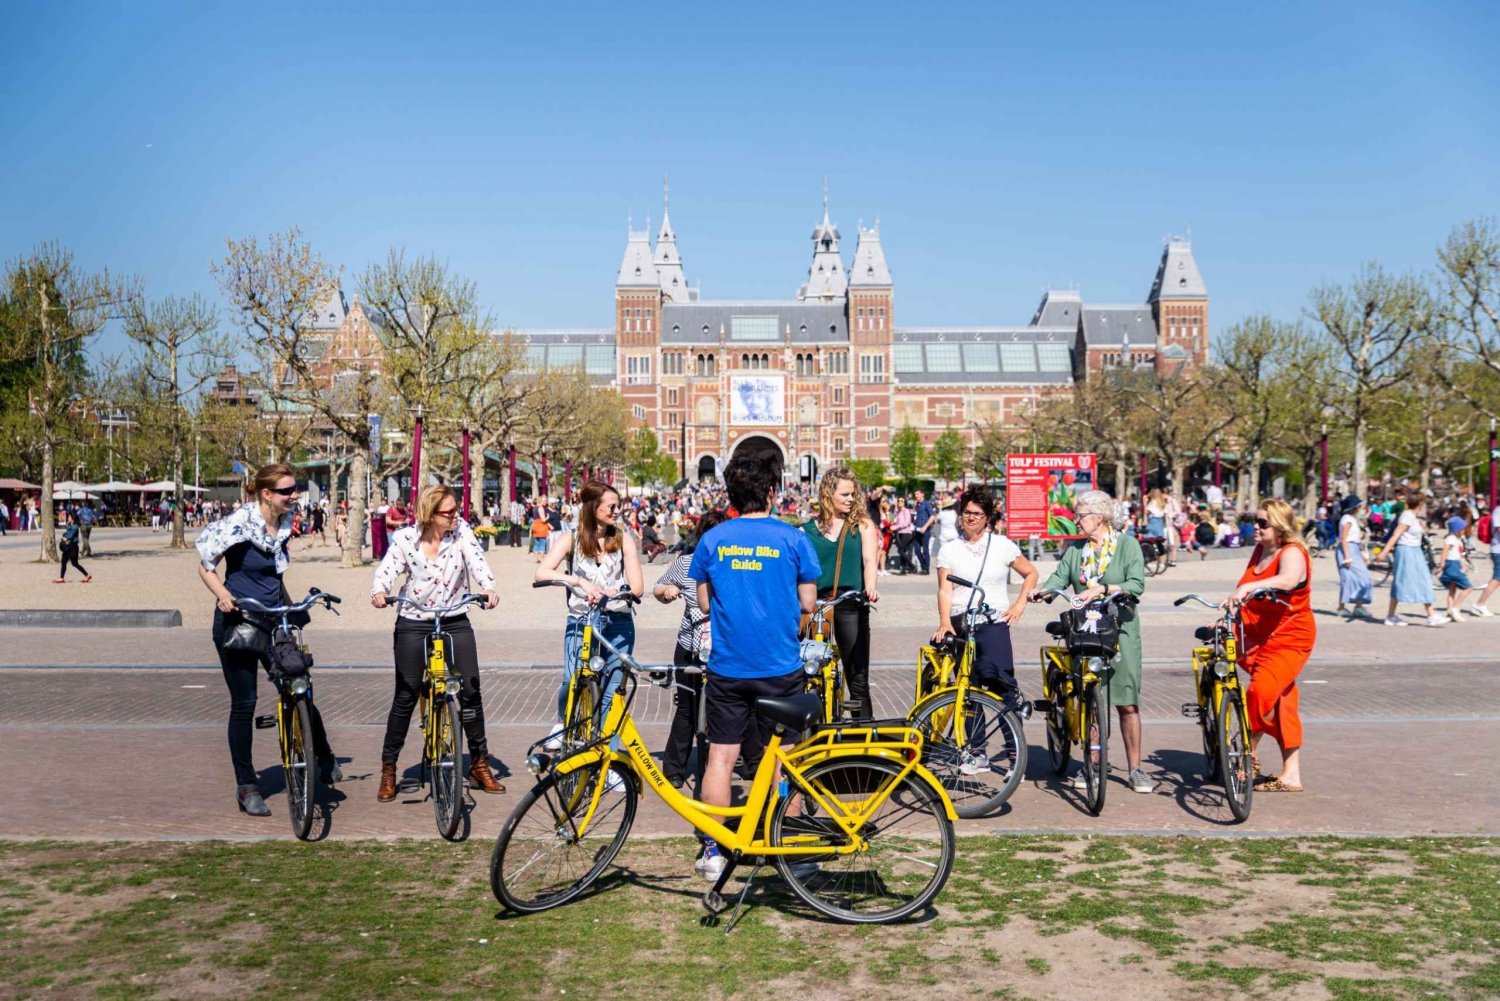 Amsterdam: Guided 3-Hour Big City Bike Tour